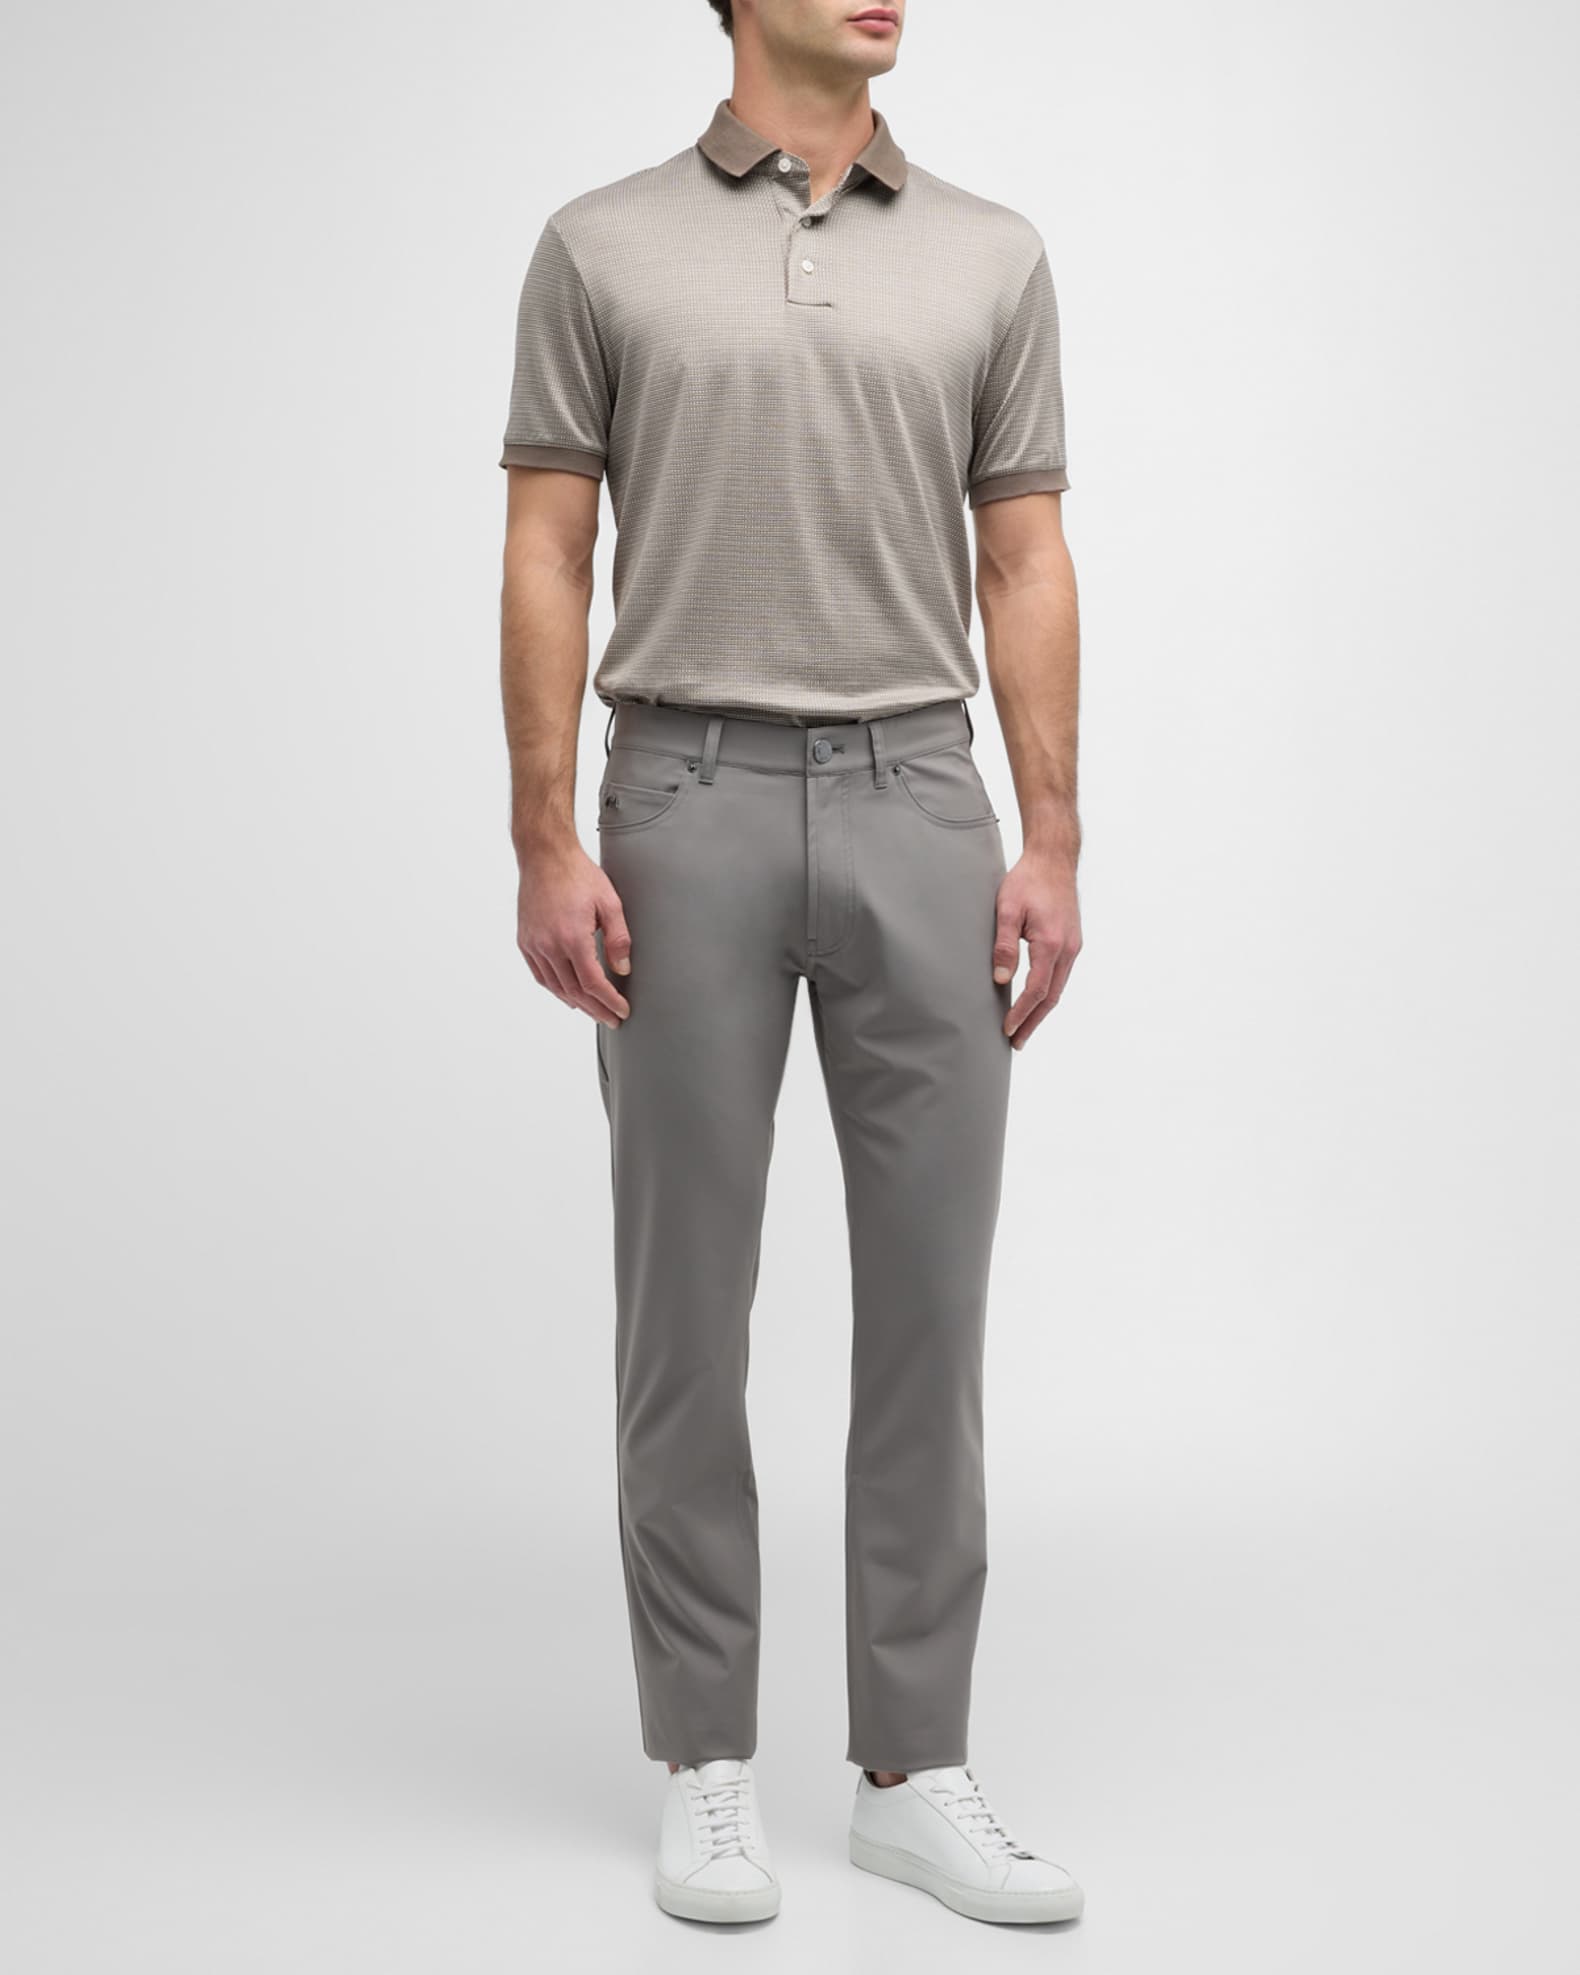 Emporio Armani Men's Printed Jersey-Stretch Polo Shirt | Neiman Marcus